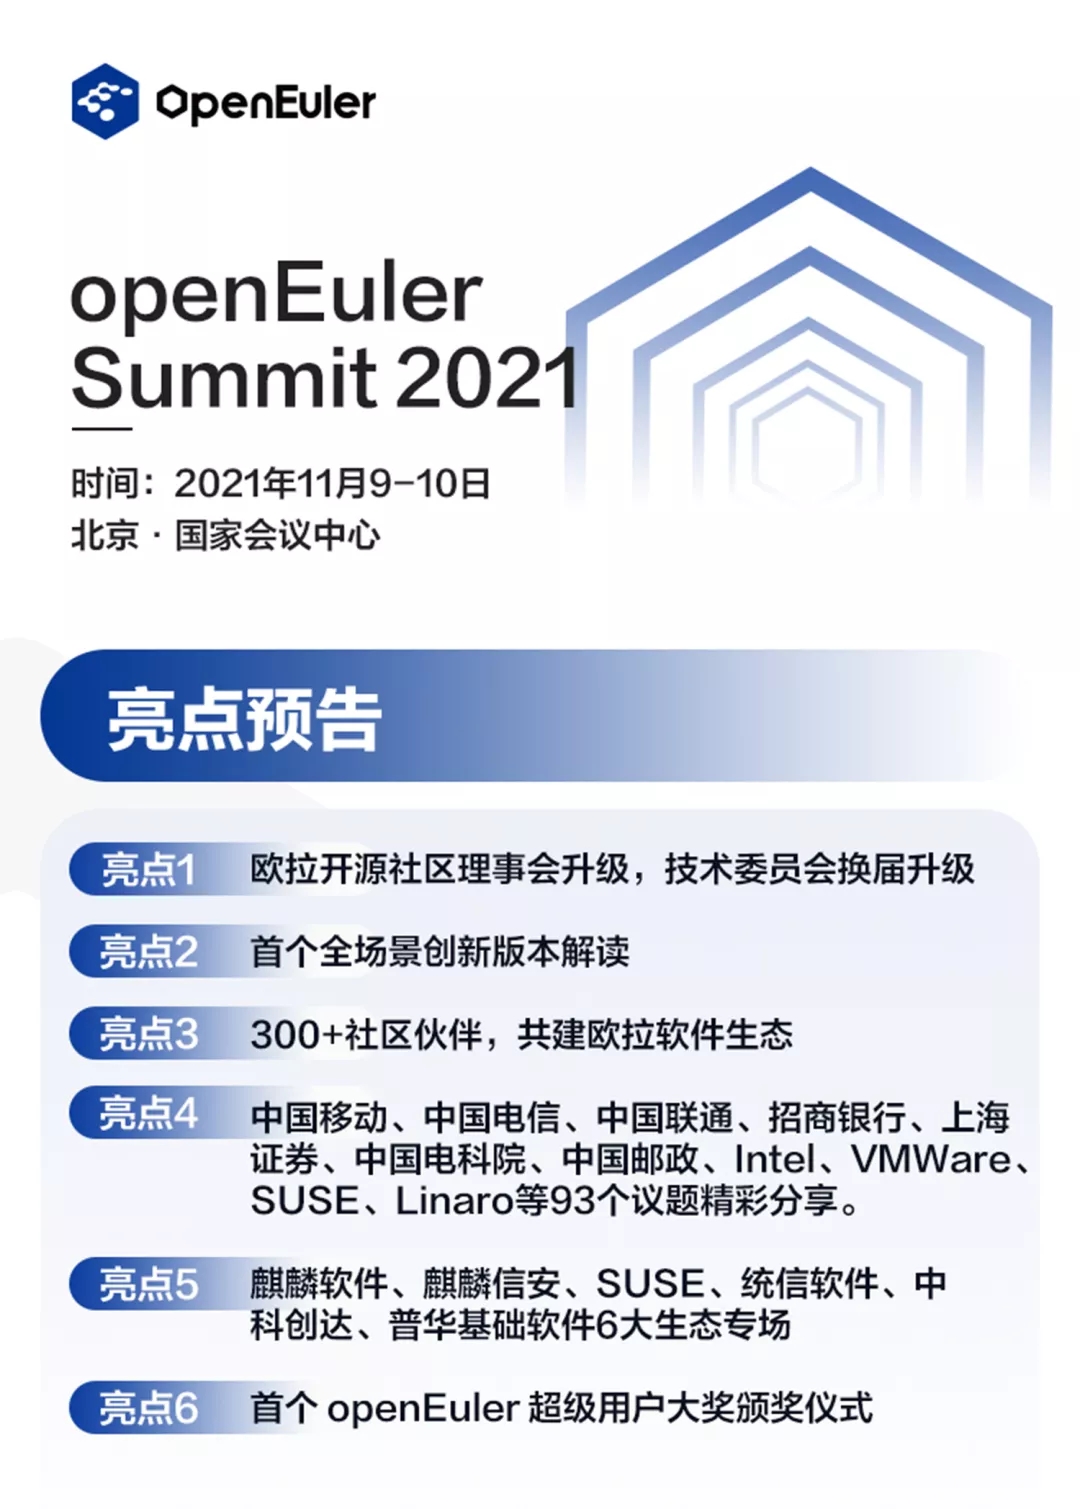 品高云即將亮相openEuler Summit 2021